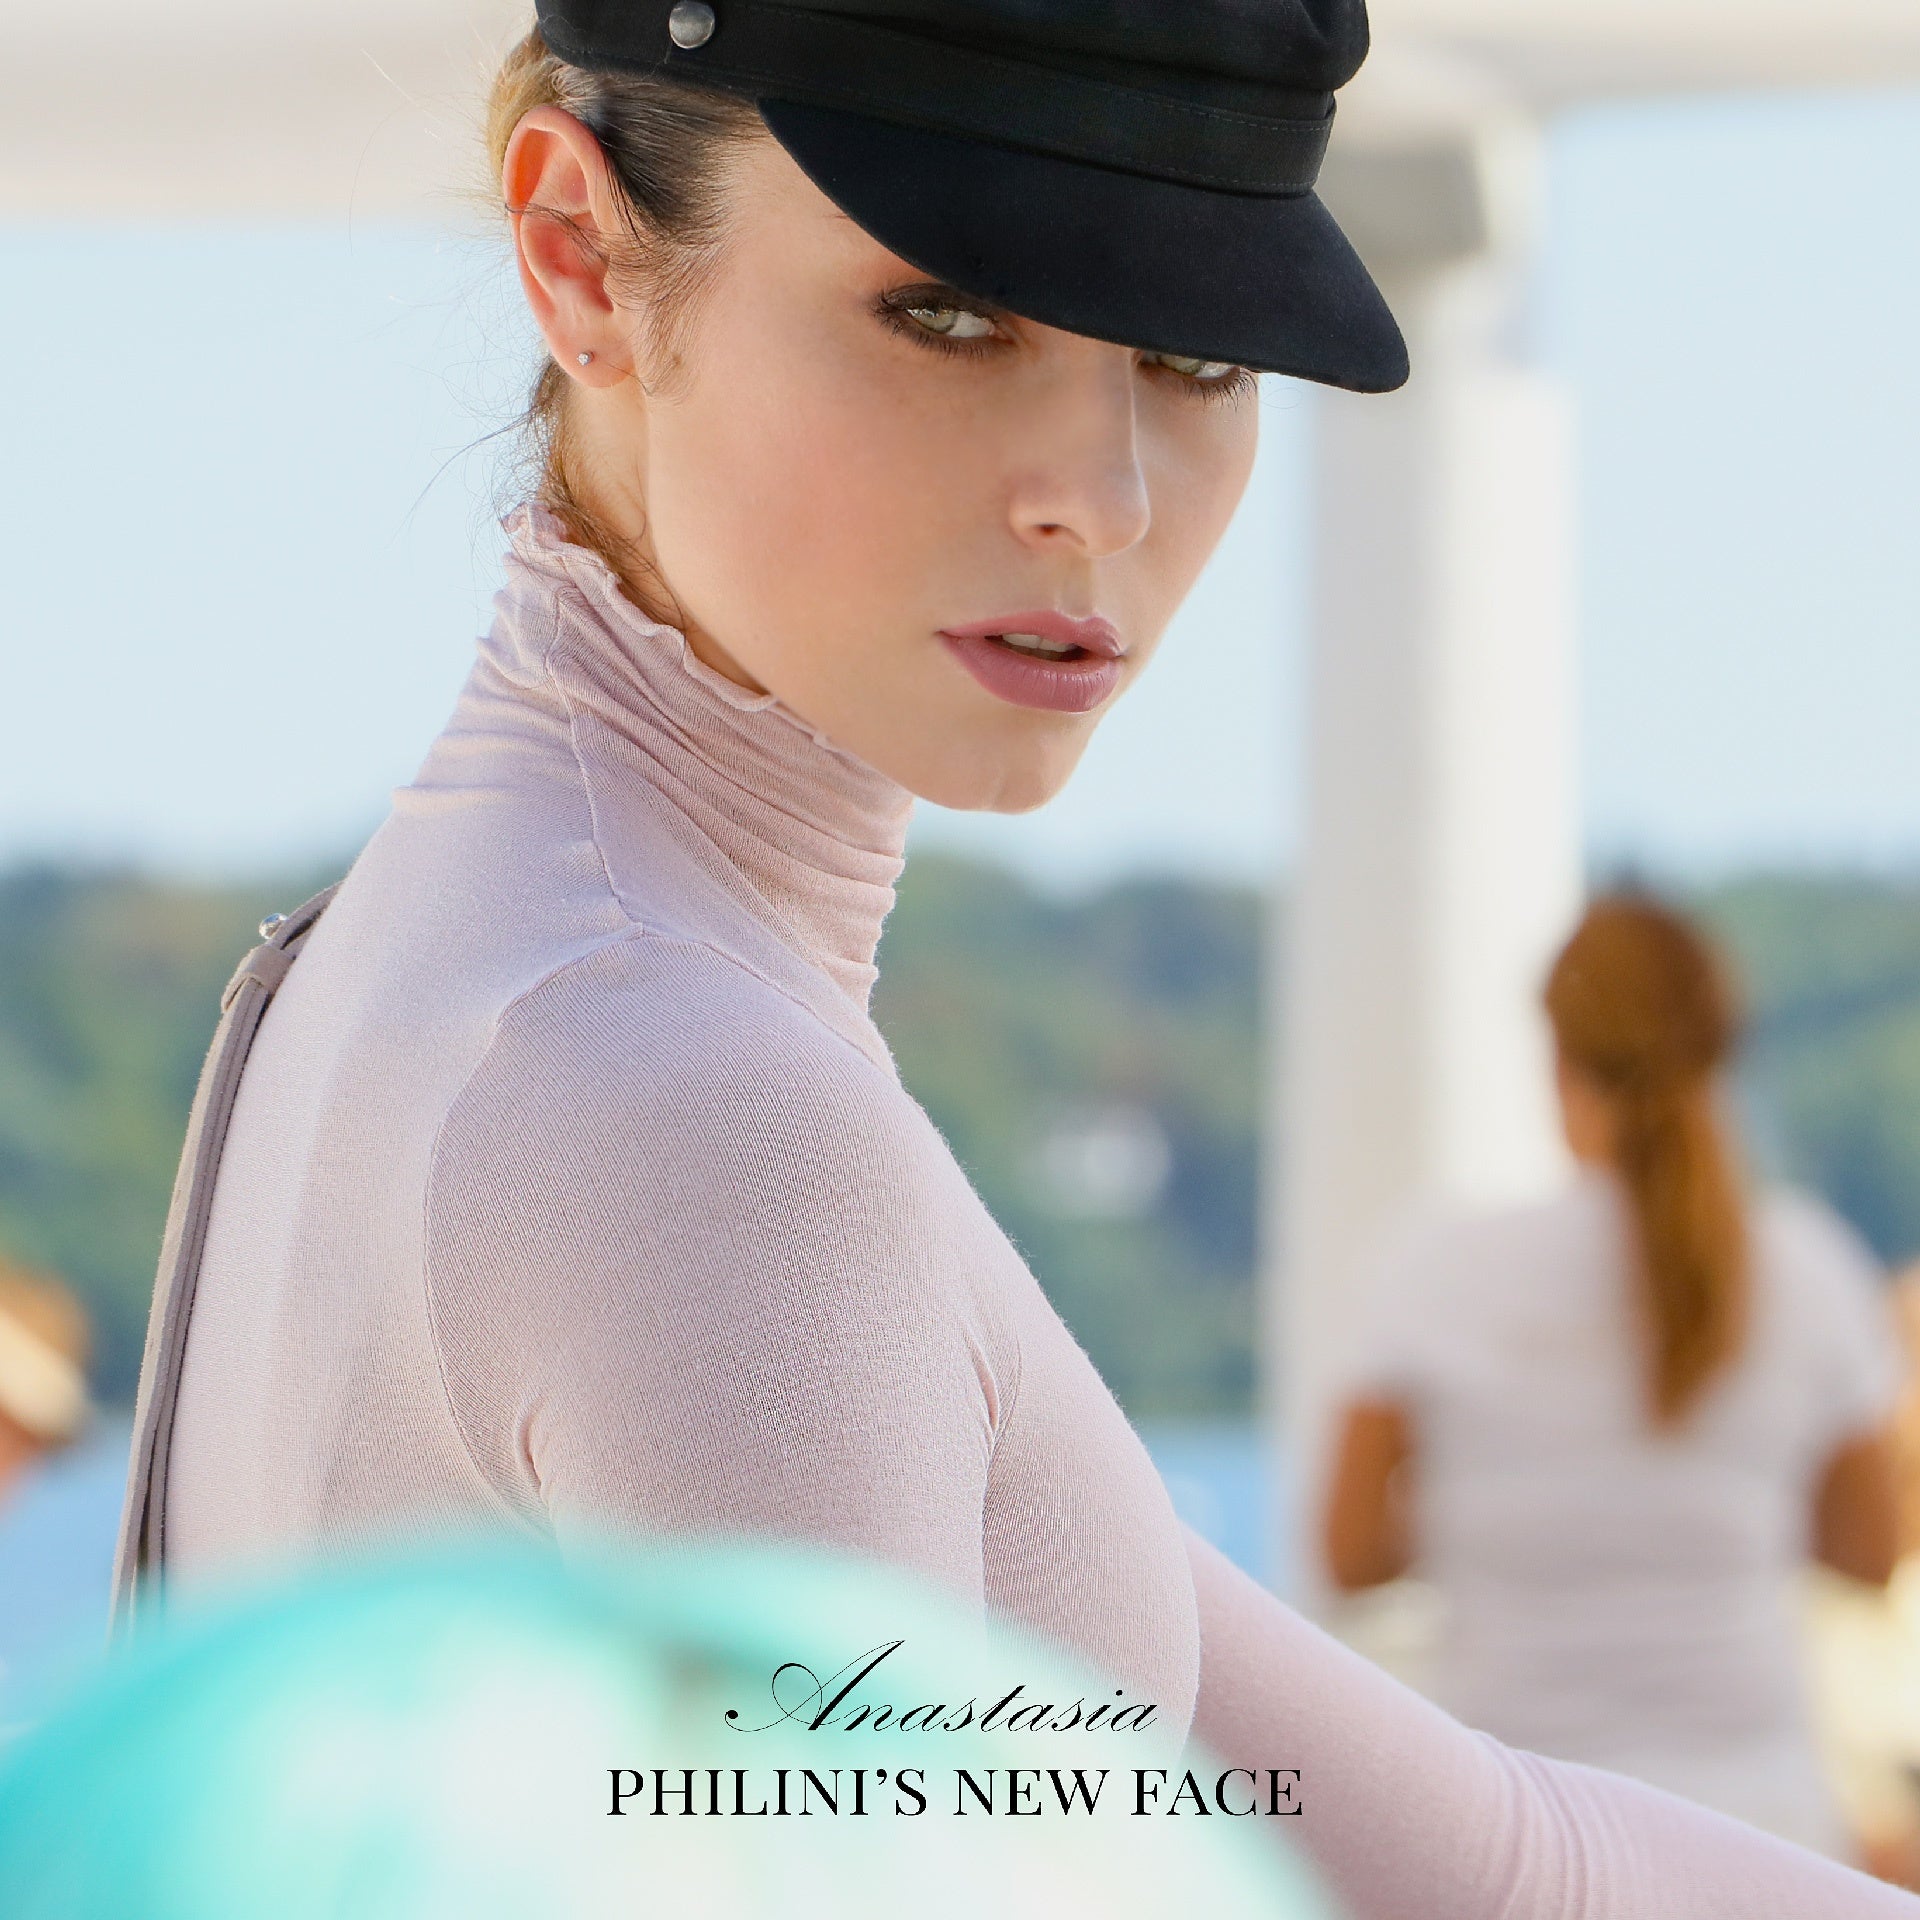 Philini new face Anastasia